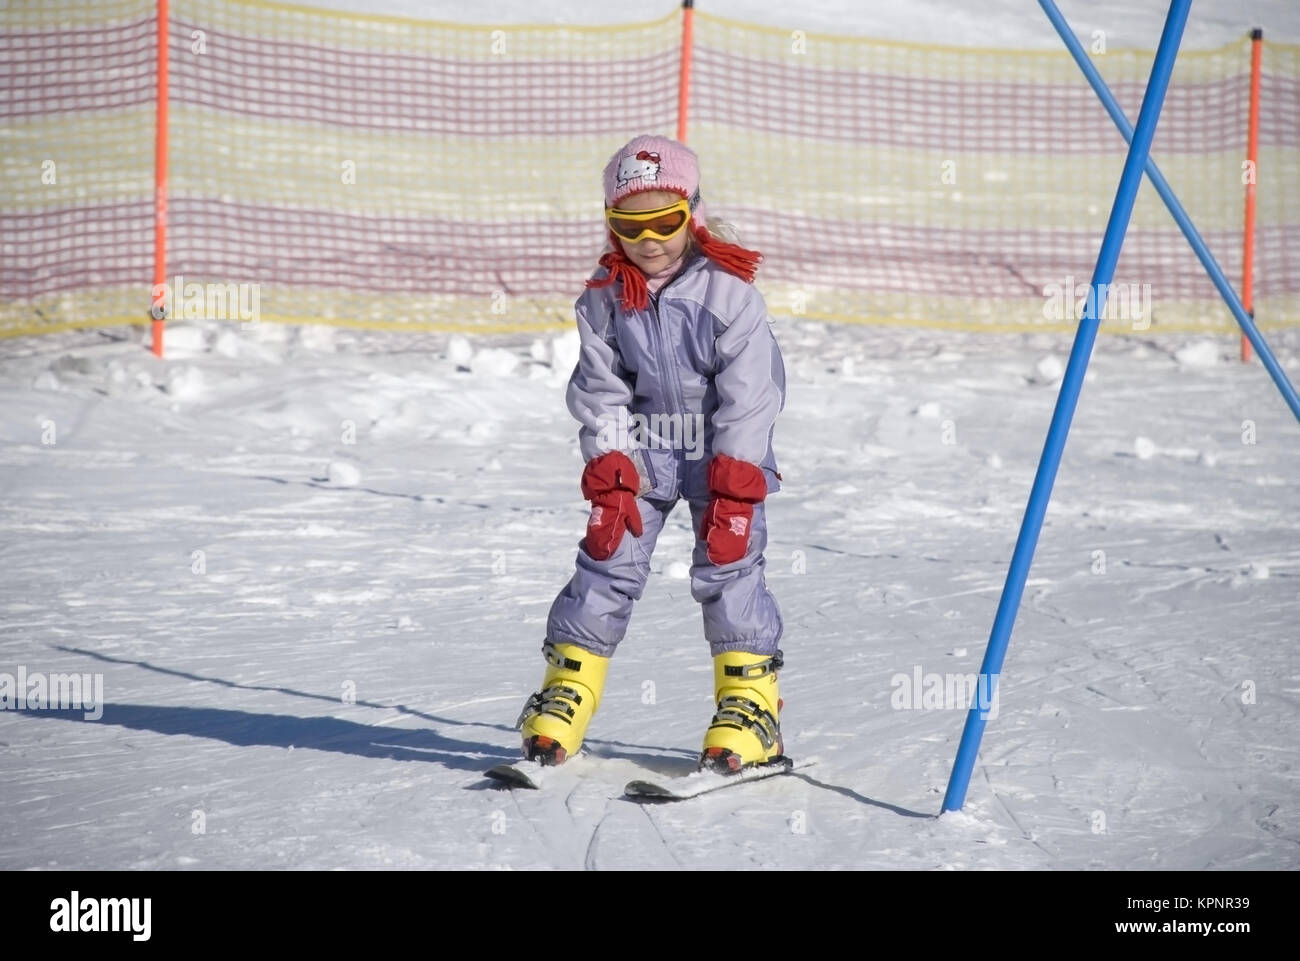 Model release , Kinderskikurs - children skiing course Stock Photo